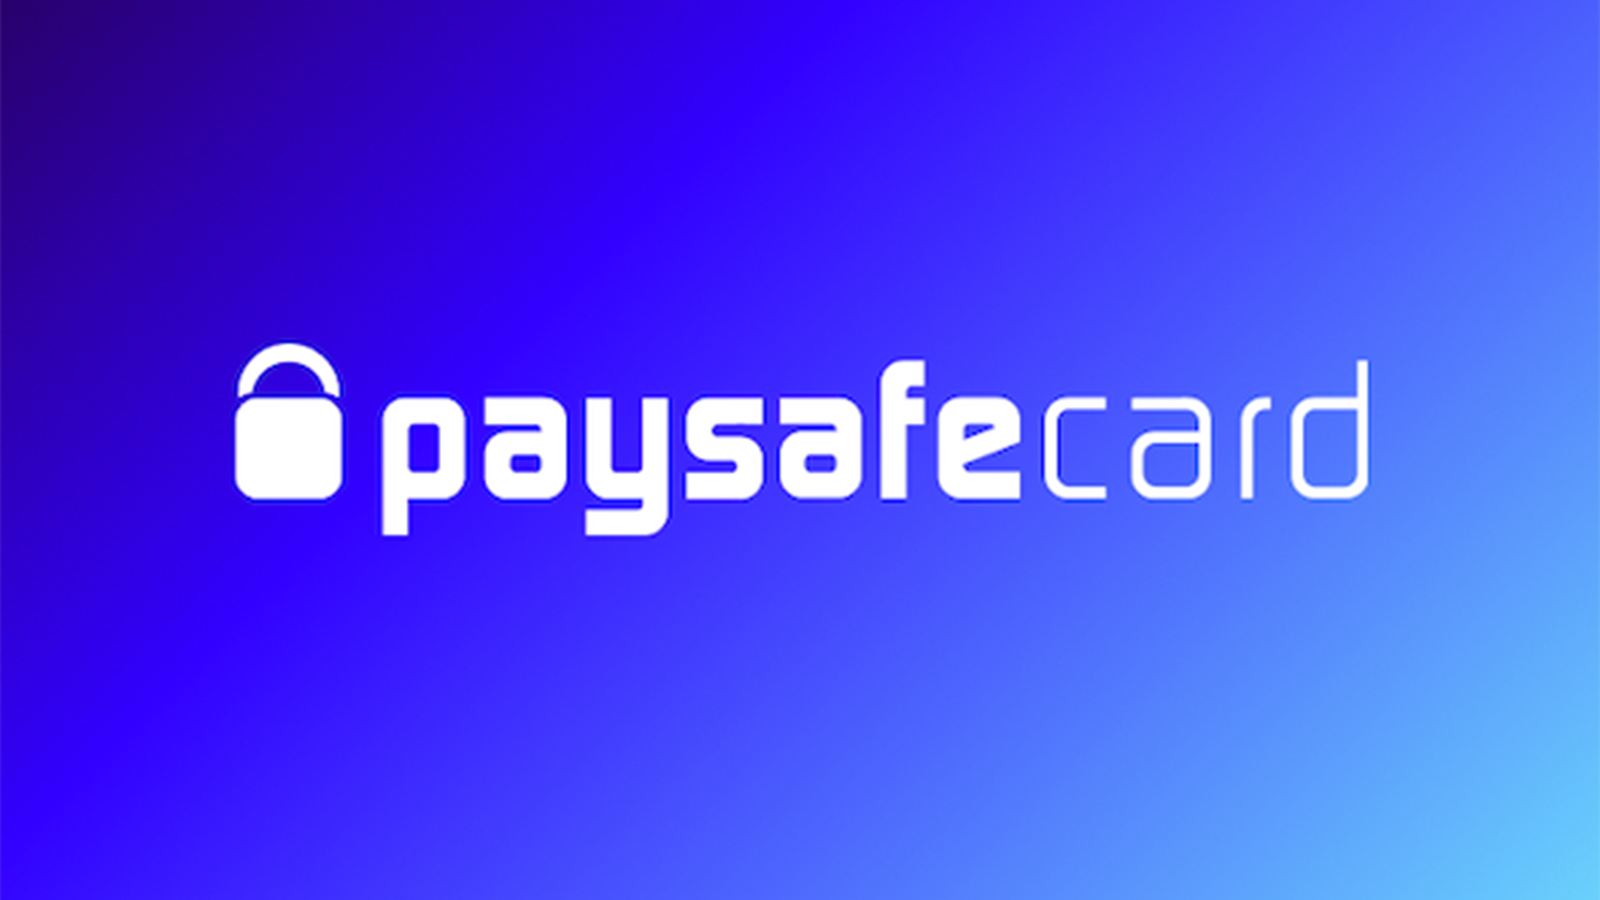 Paysafecard - Online Casinos Accepting Paysafecard